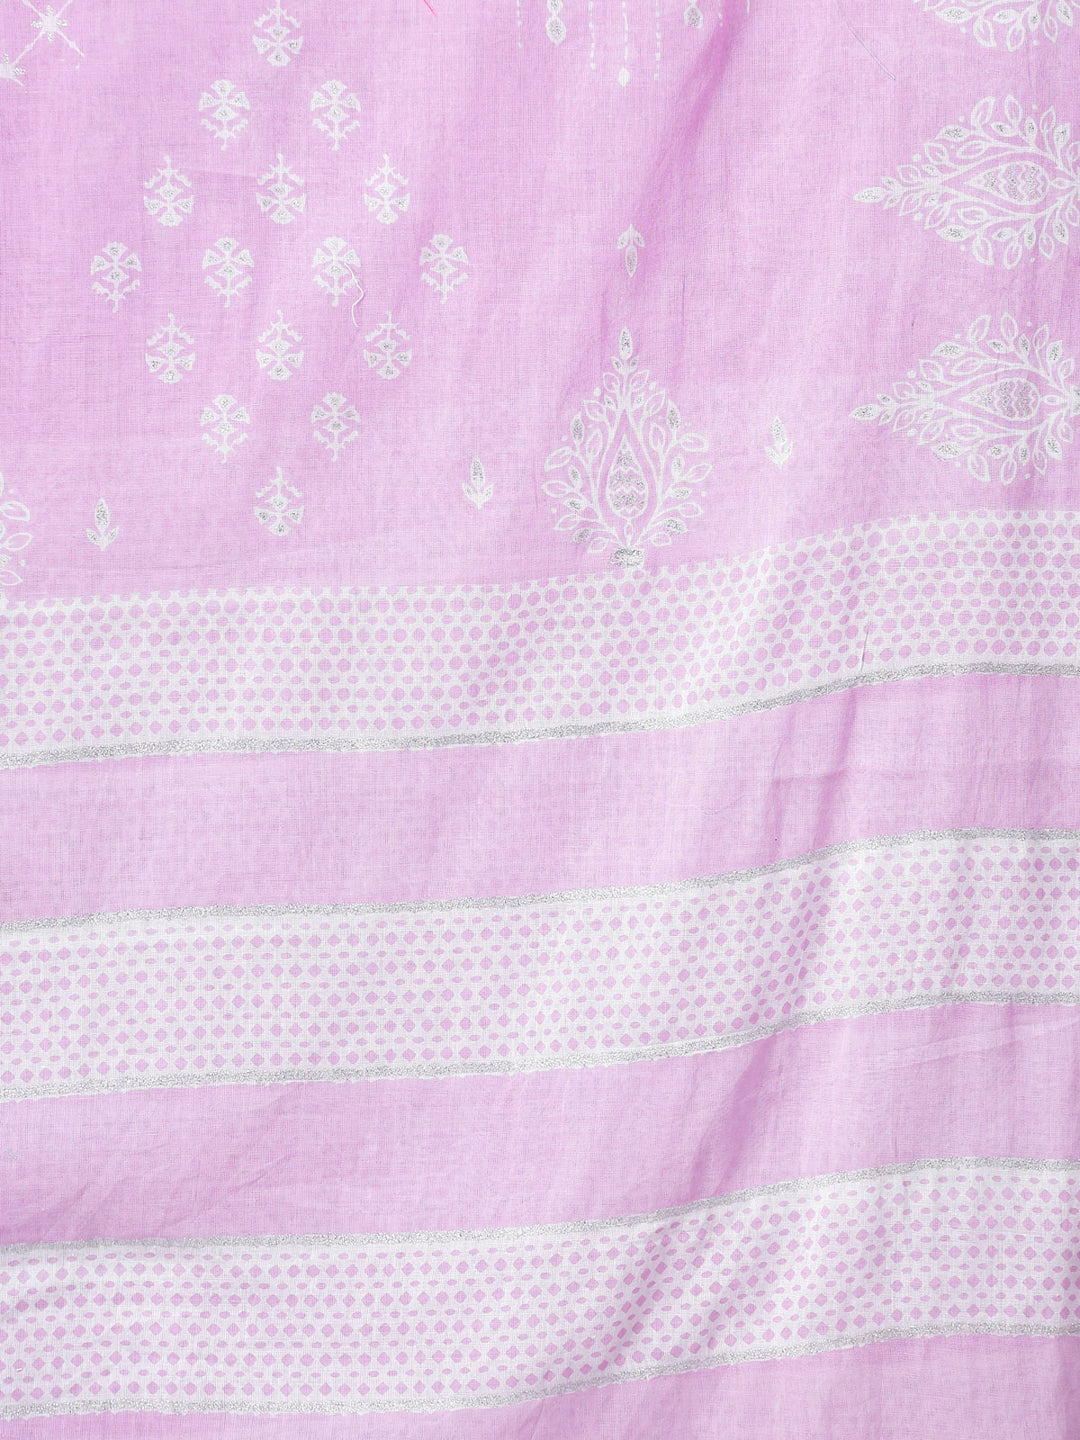 Myshka Cotton Printed 3/4 Sleeve Round Pink Women Kurta set